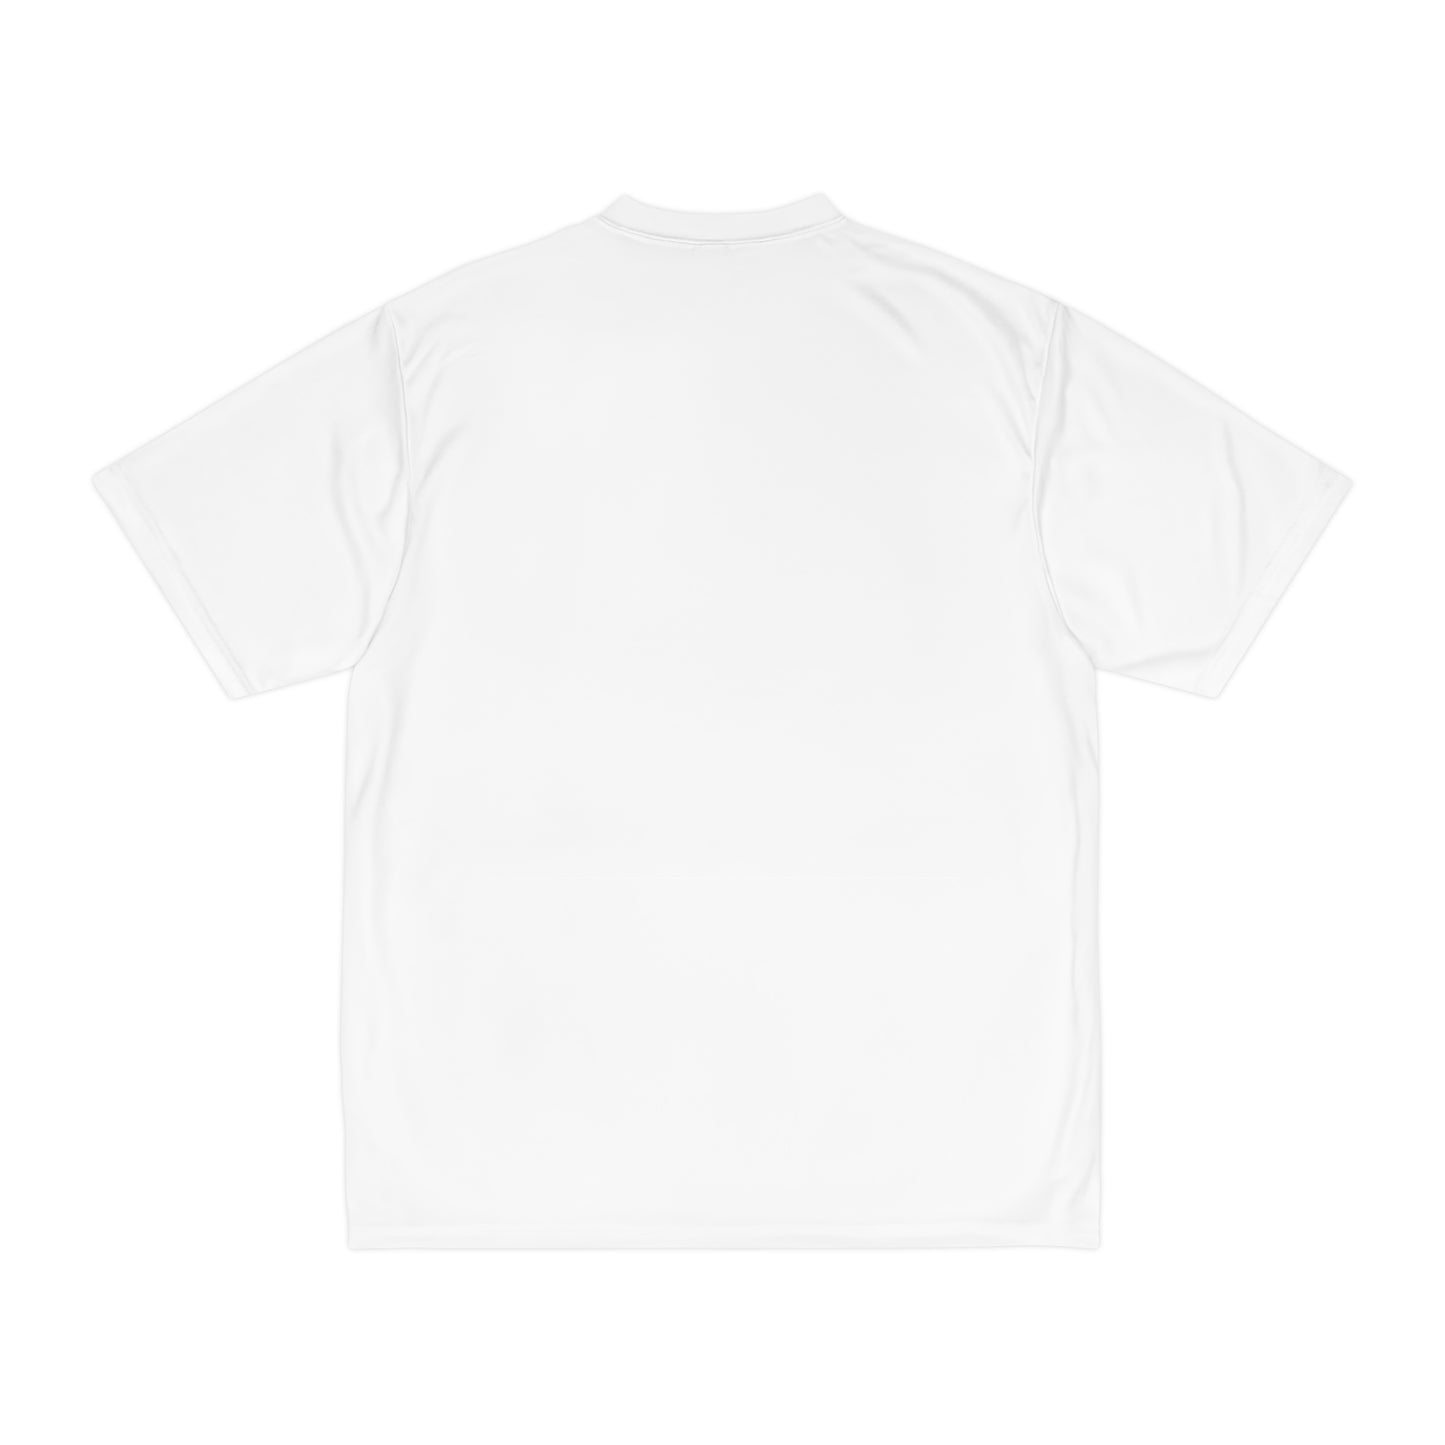 Unstax Men's Performance T-Shirt